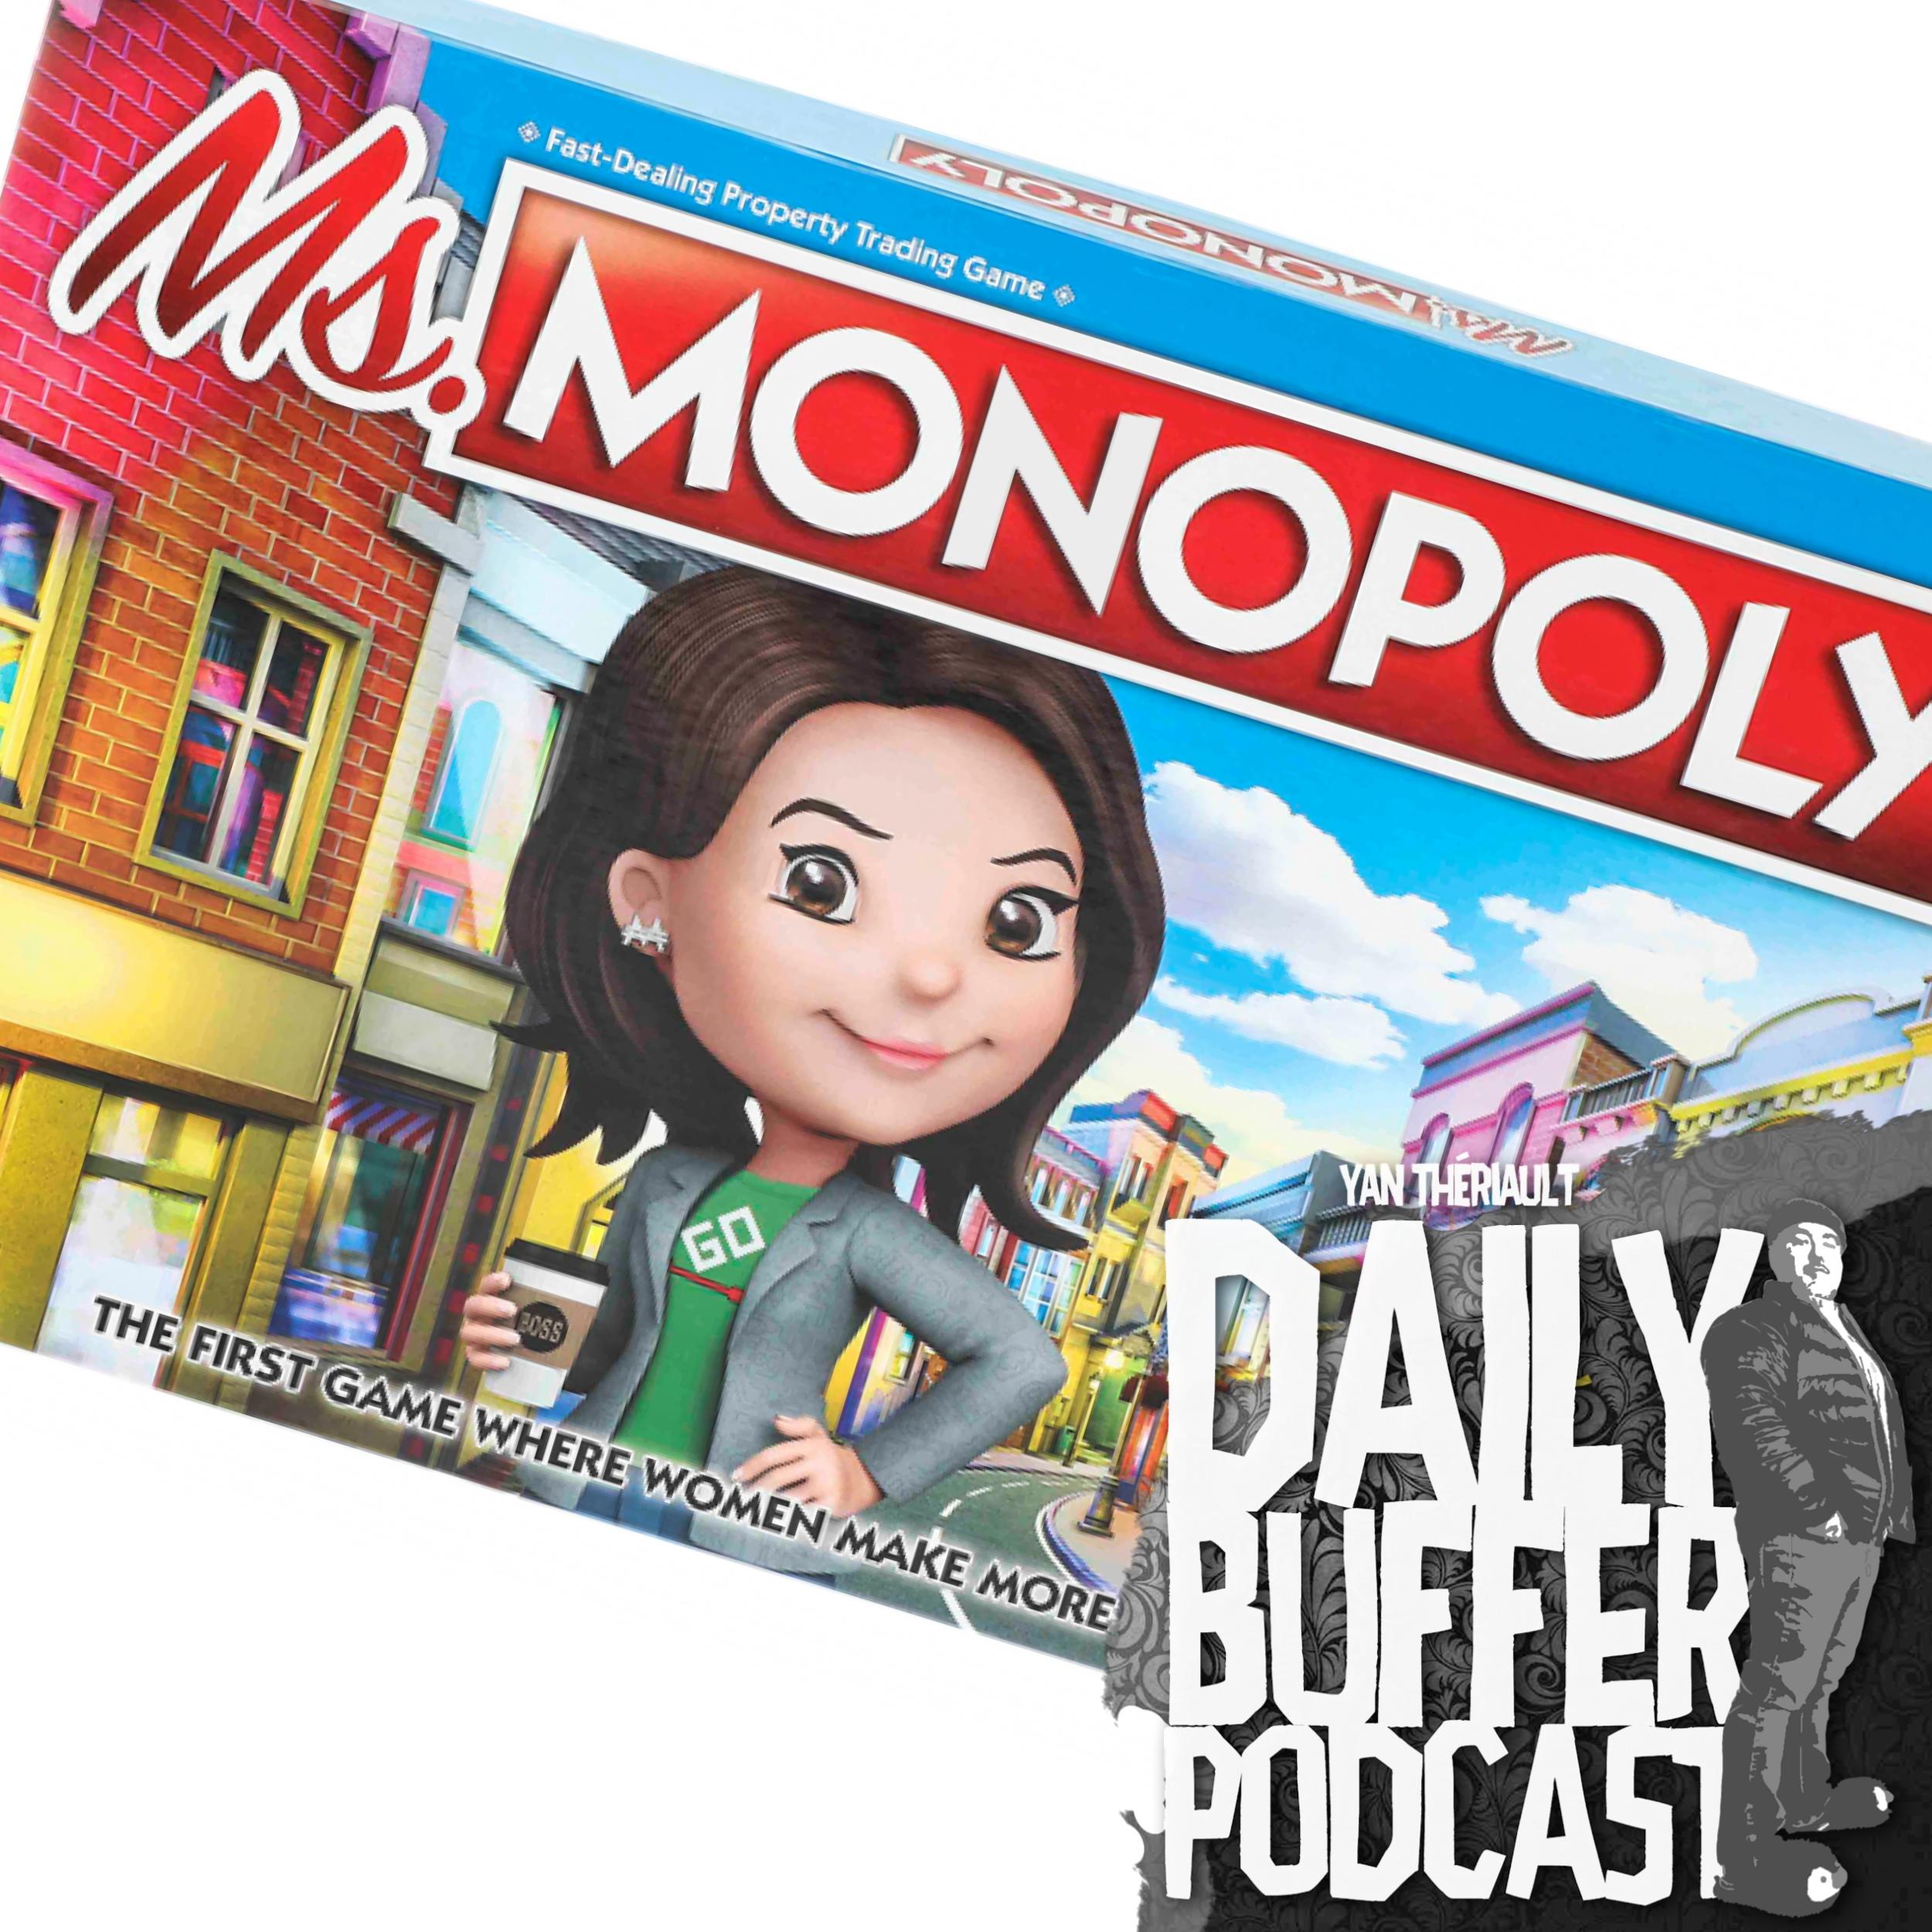 L'hypocrisie derrière Madame Monopoly - Daily Buffer Podcast - 2019 09 11 l